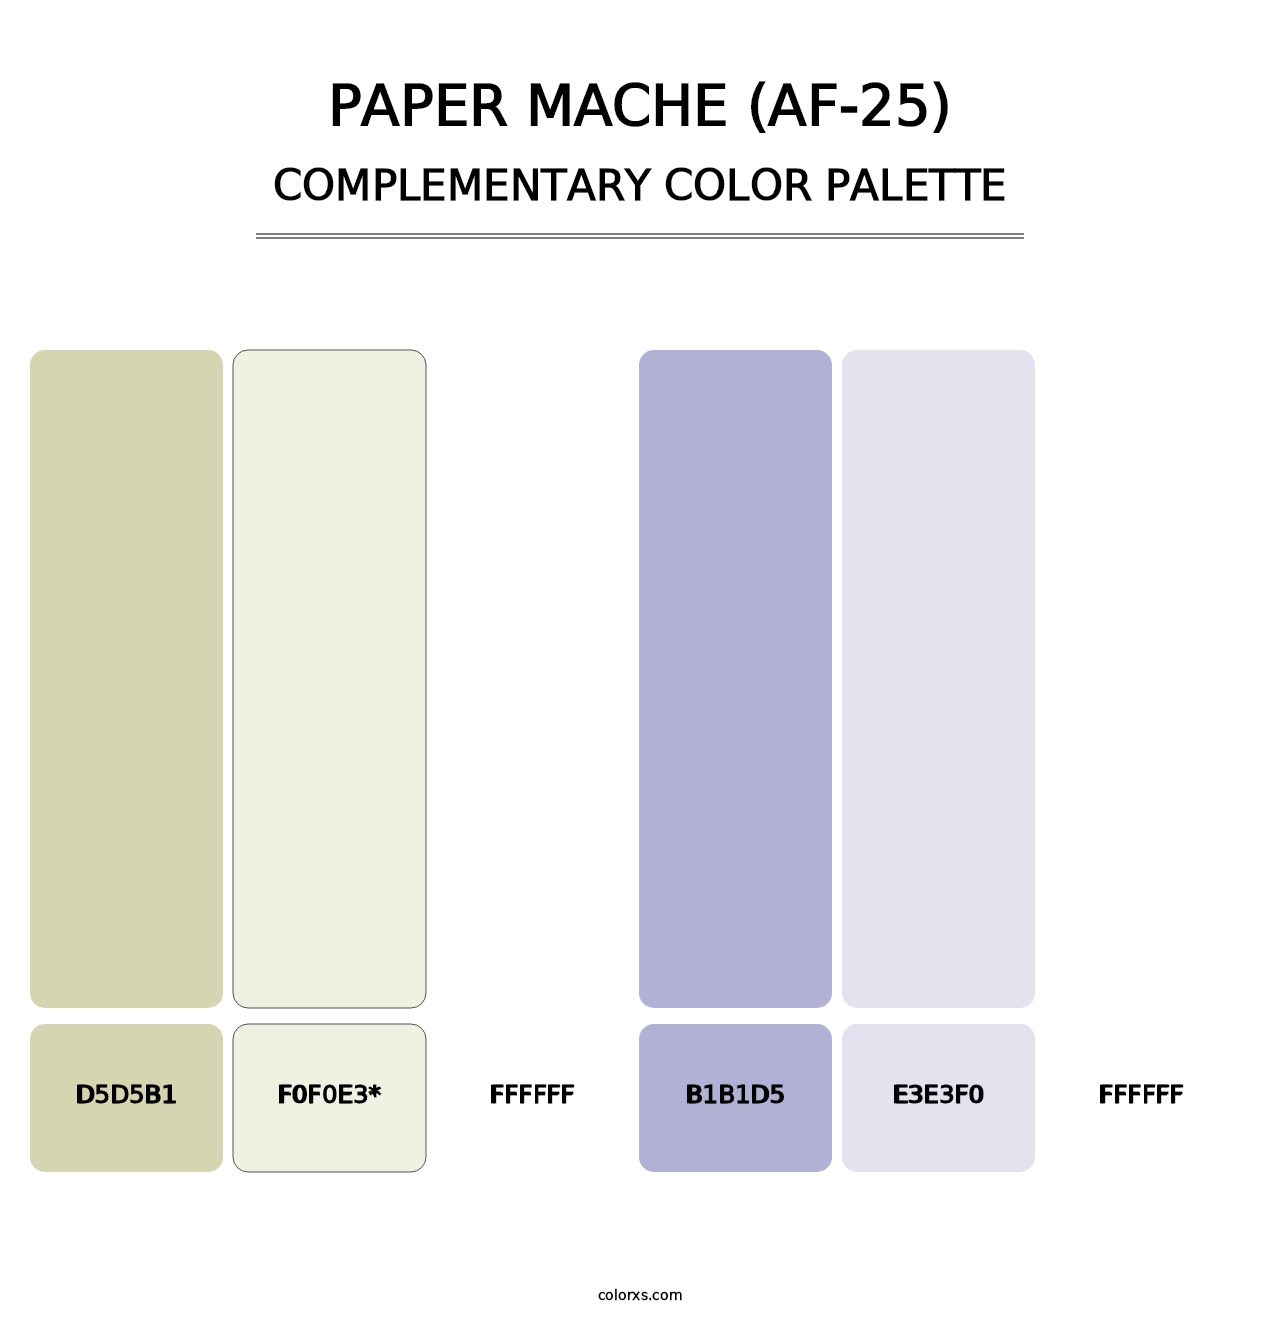 Paper Mache (AF-25) - Complementary Color Palette